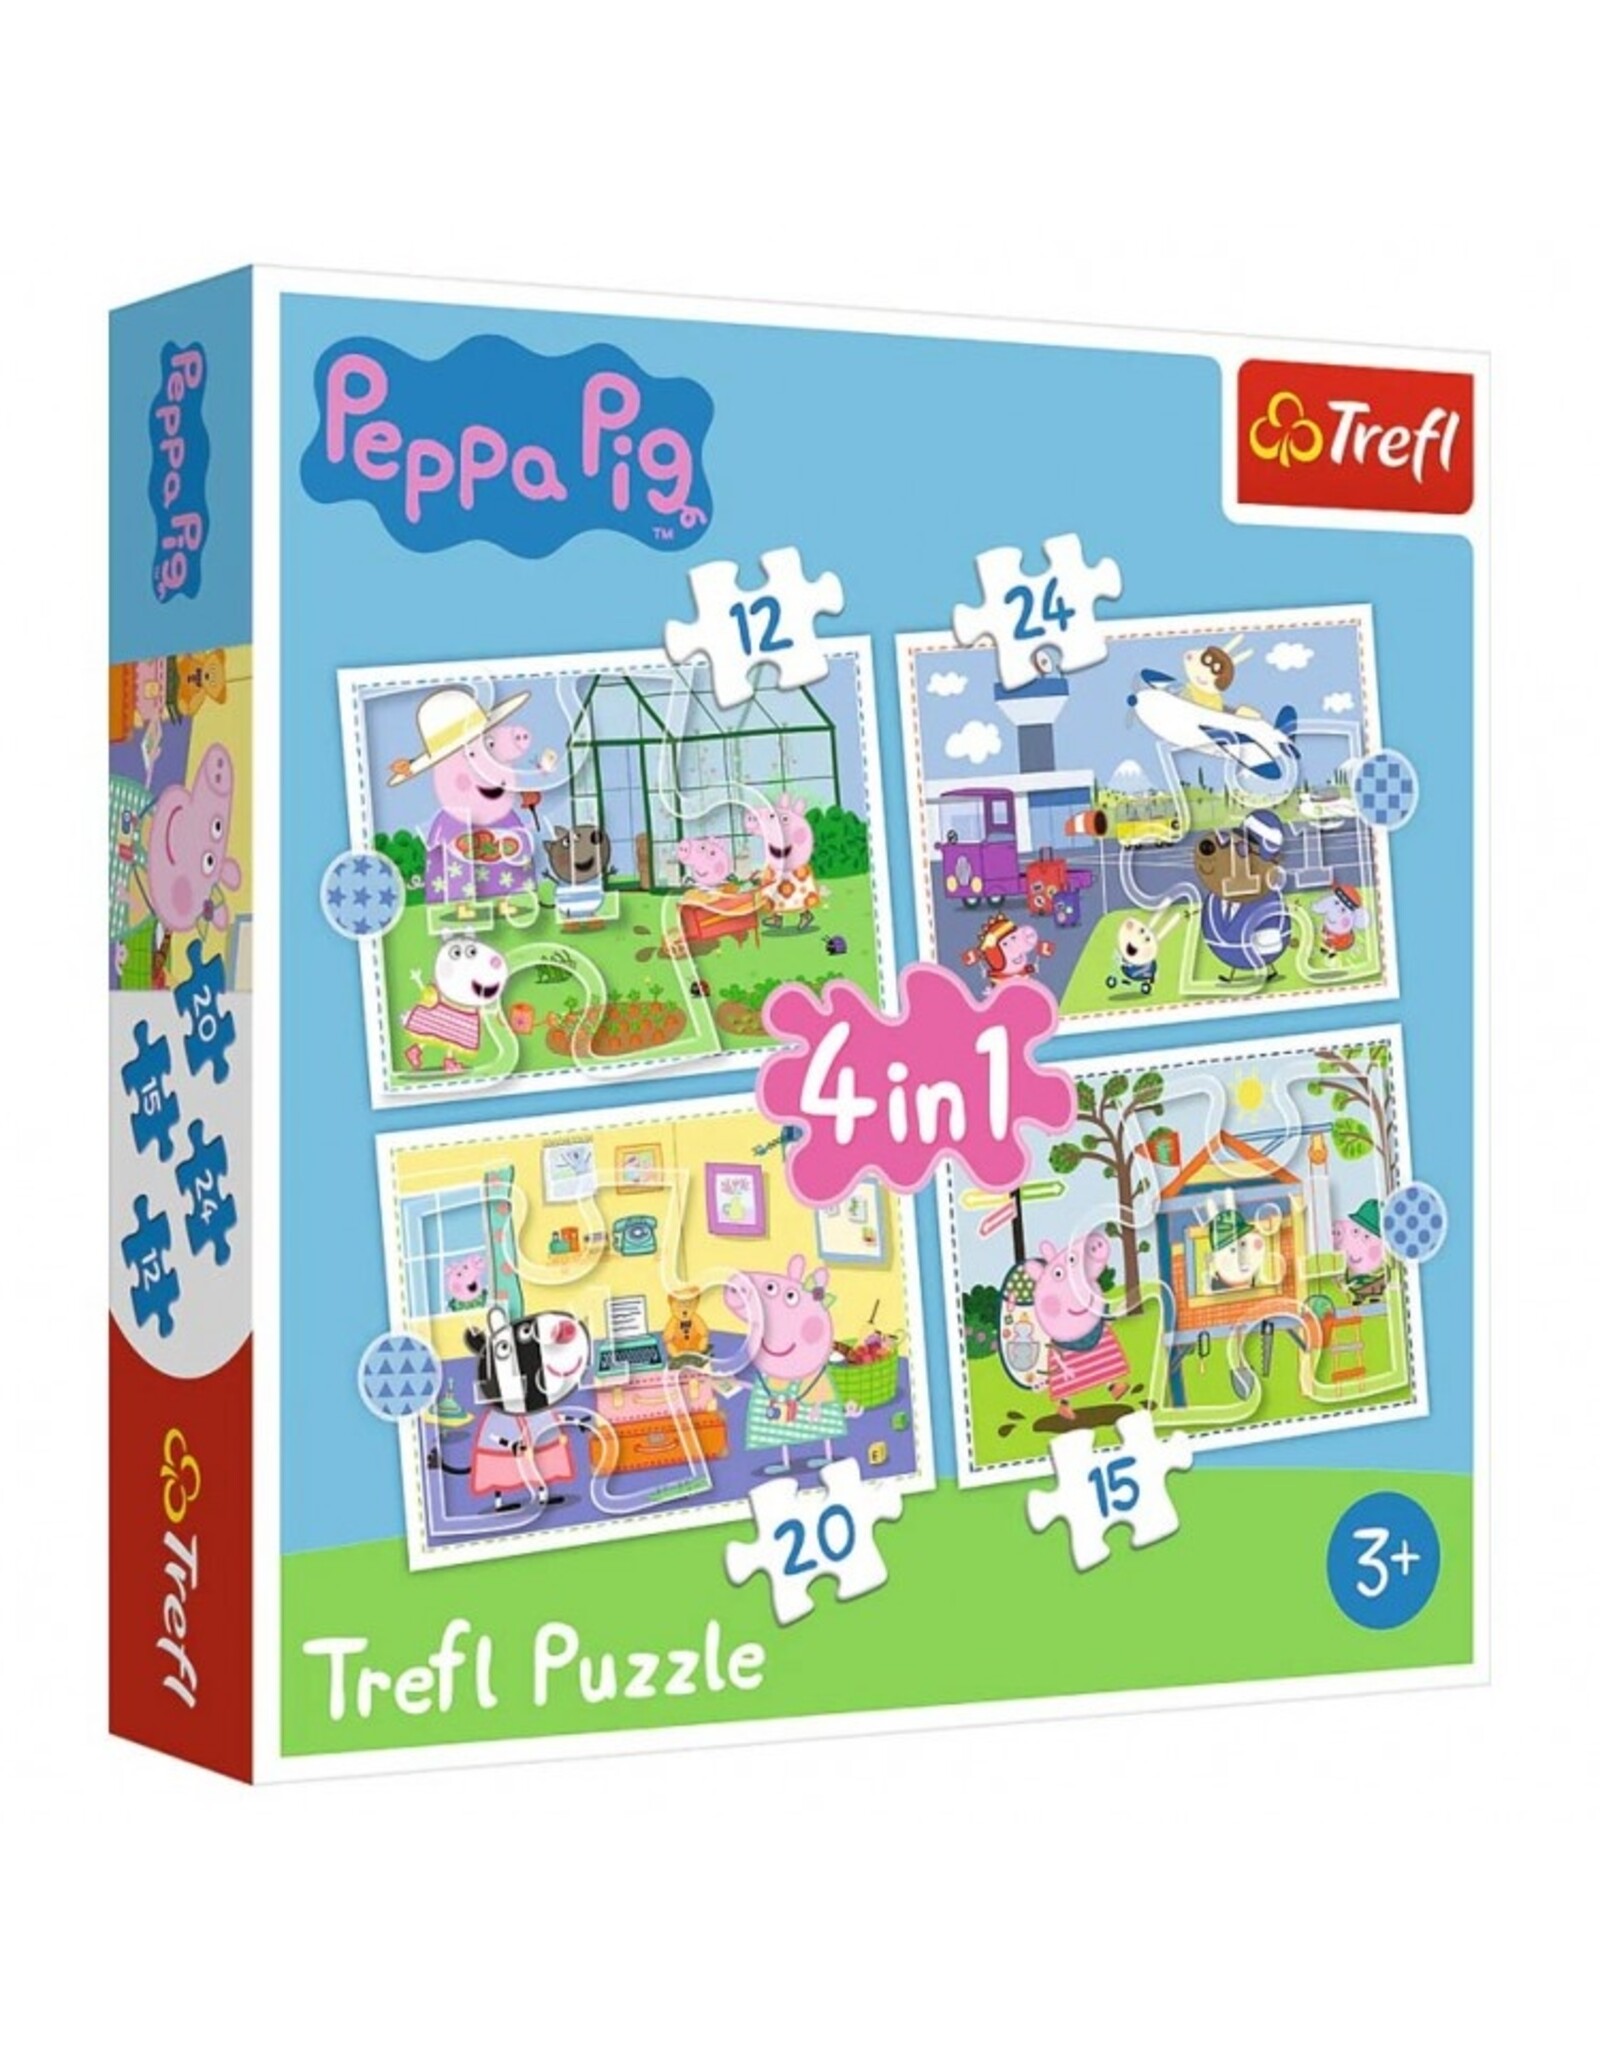 Trefl Puzzle: Peppa Pig 4 in 1: 12/15/20/24pc